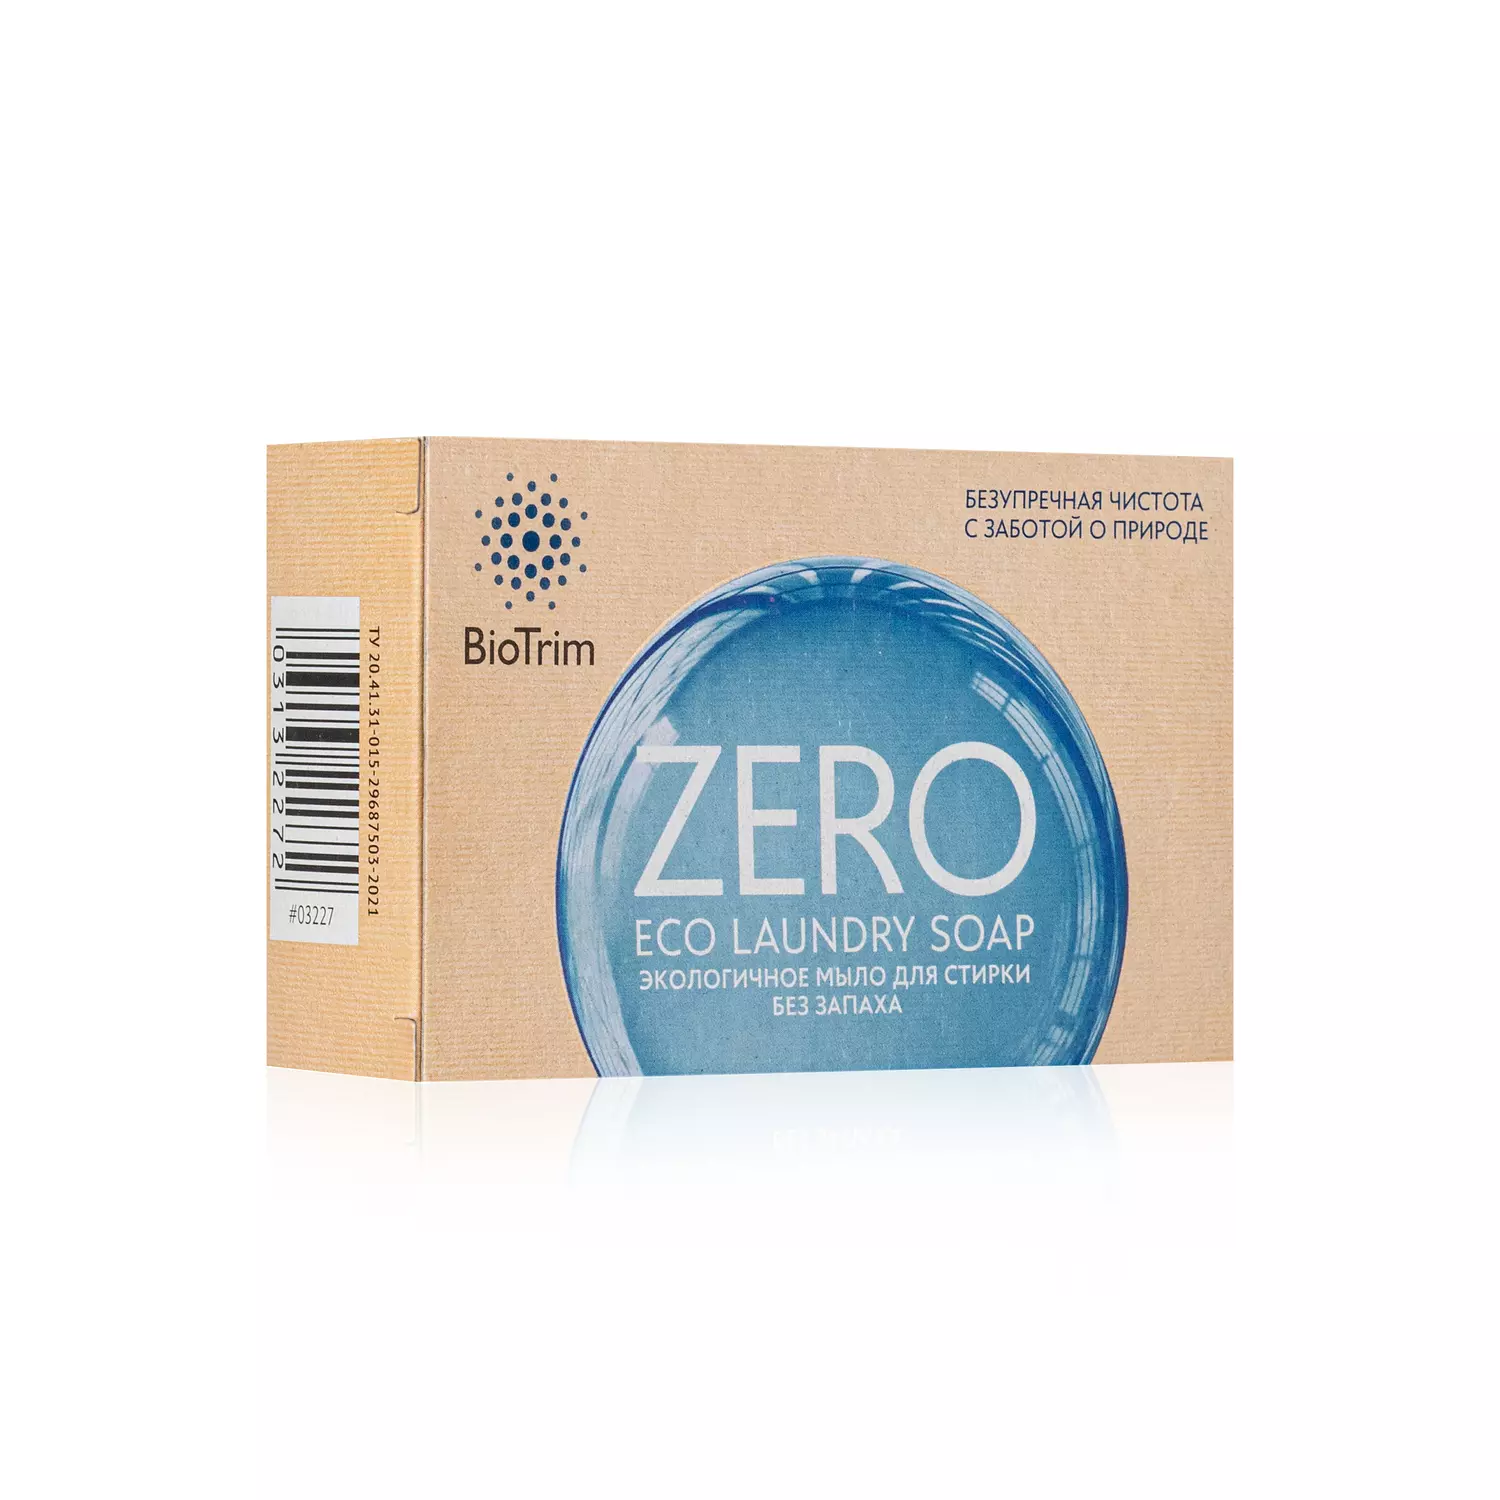 BioTrim Eco Laundry Soap ZERO for laundry, unscented || صابونة غسيل زيرو  hover image